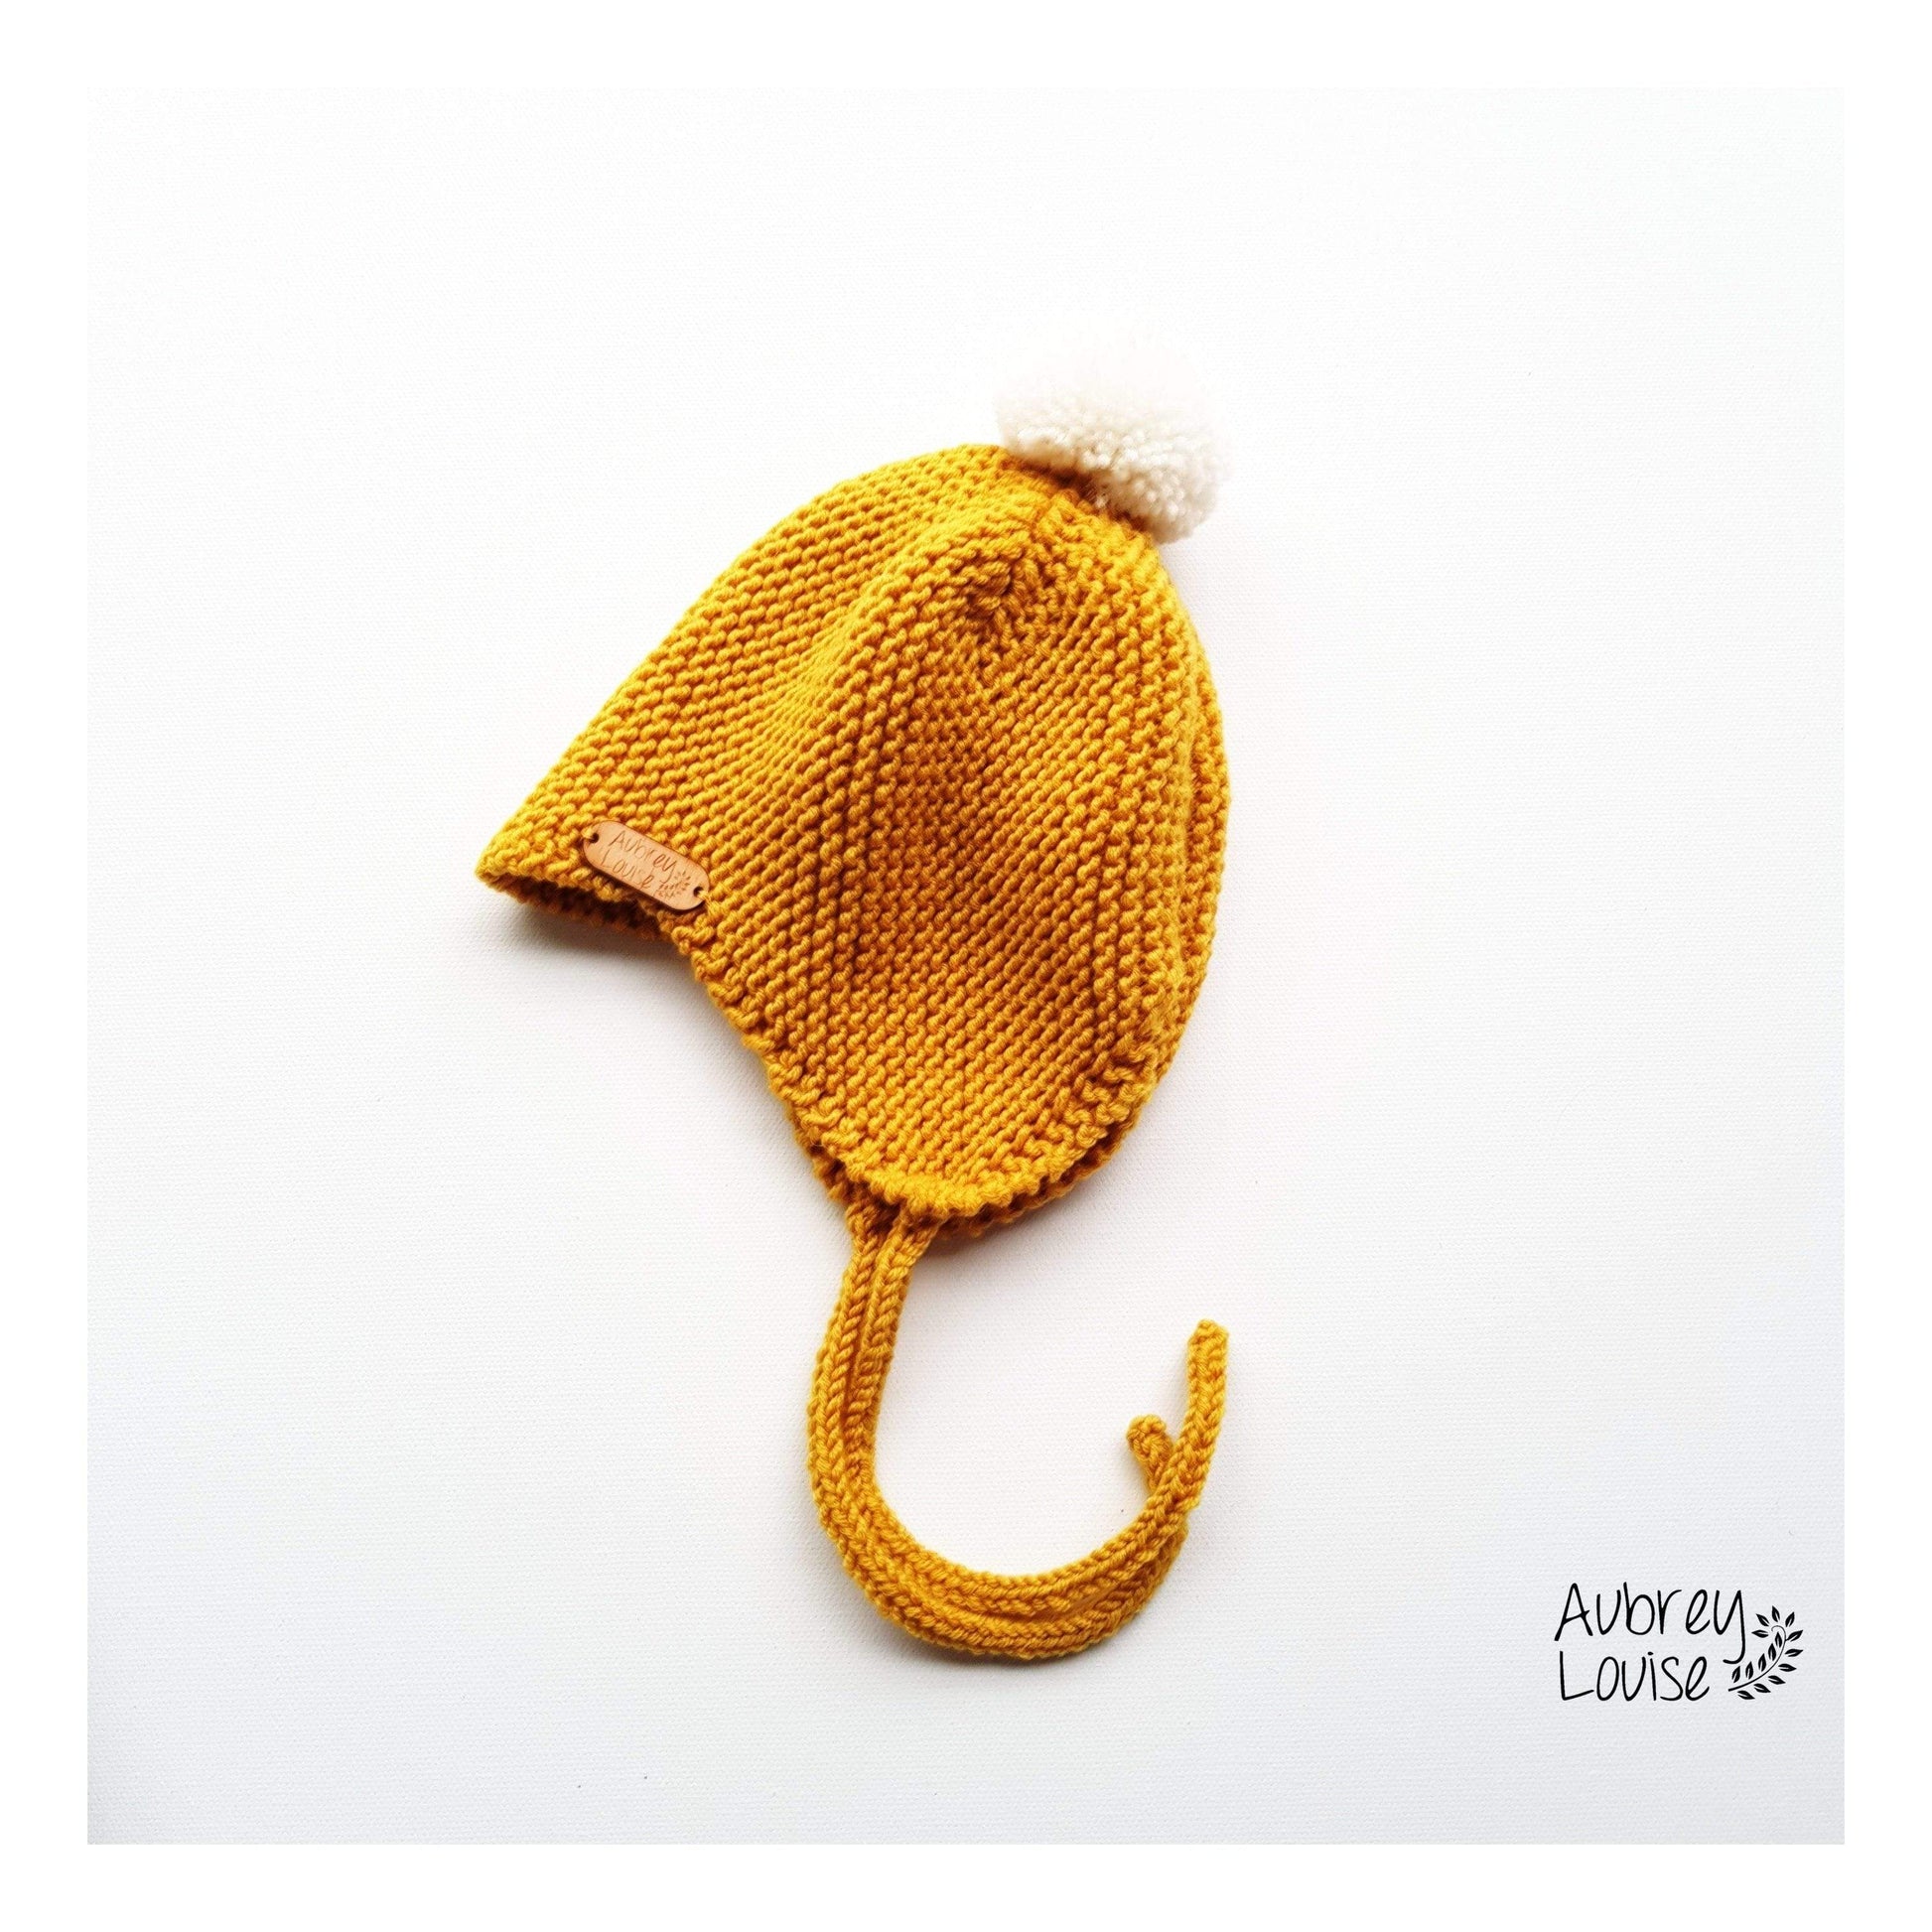 Aubrey Louise Hats/Bonnets 0-3 months Aviator hat